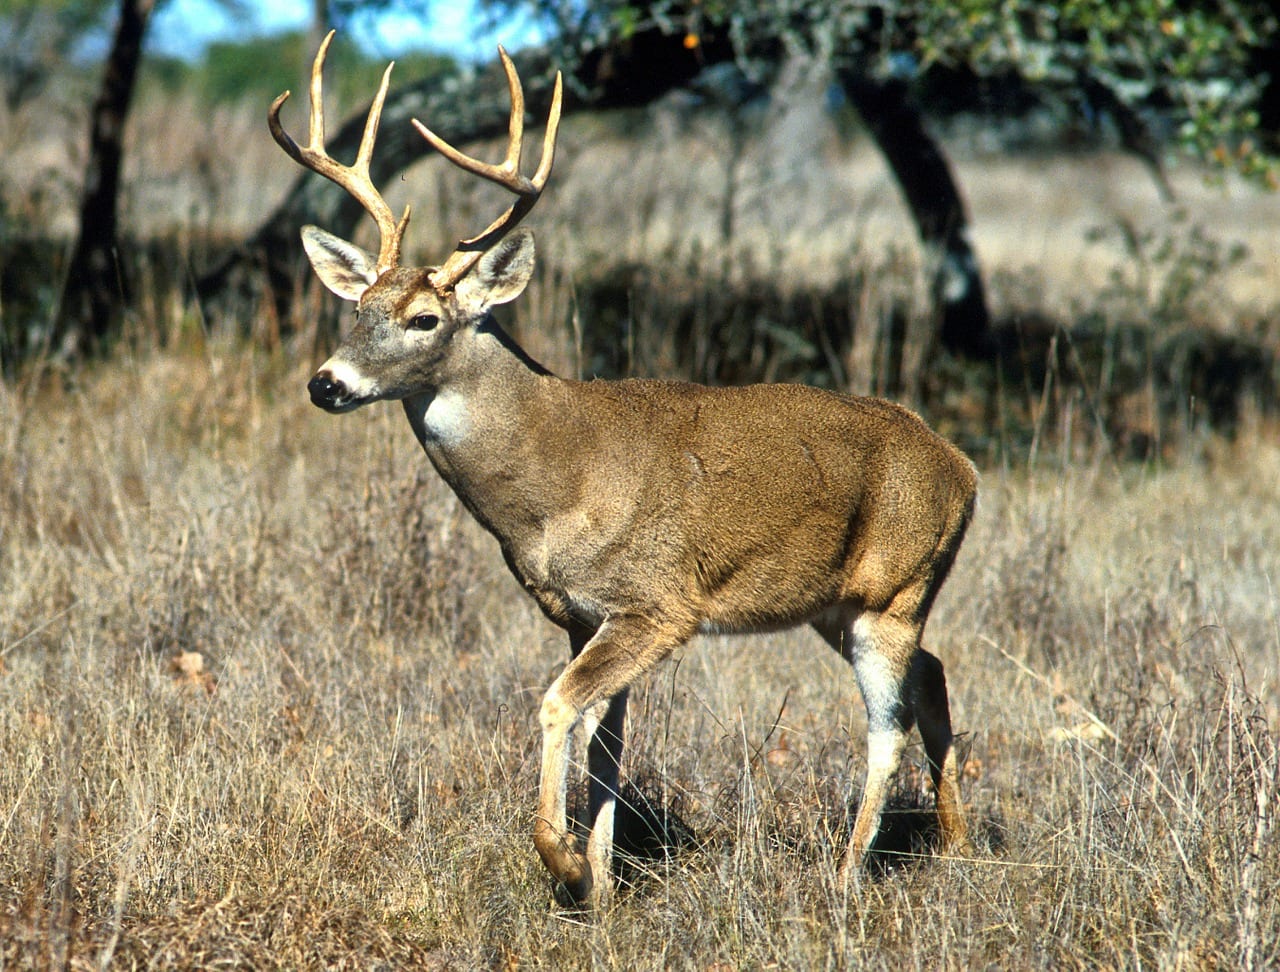 https://pixabay.com/photos/white-tailed-deer-animal-nature-139715/